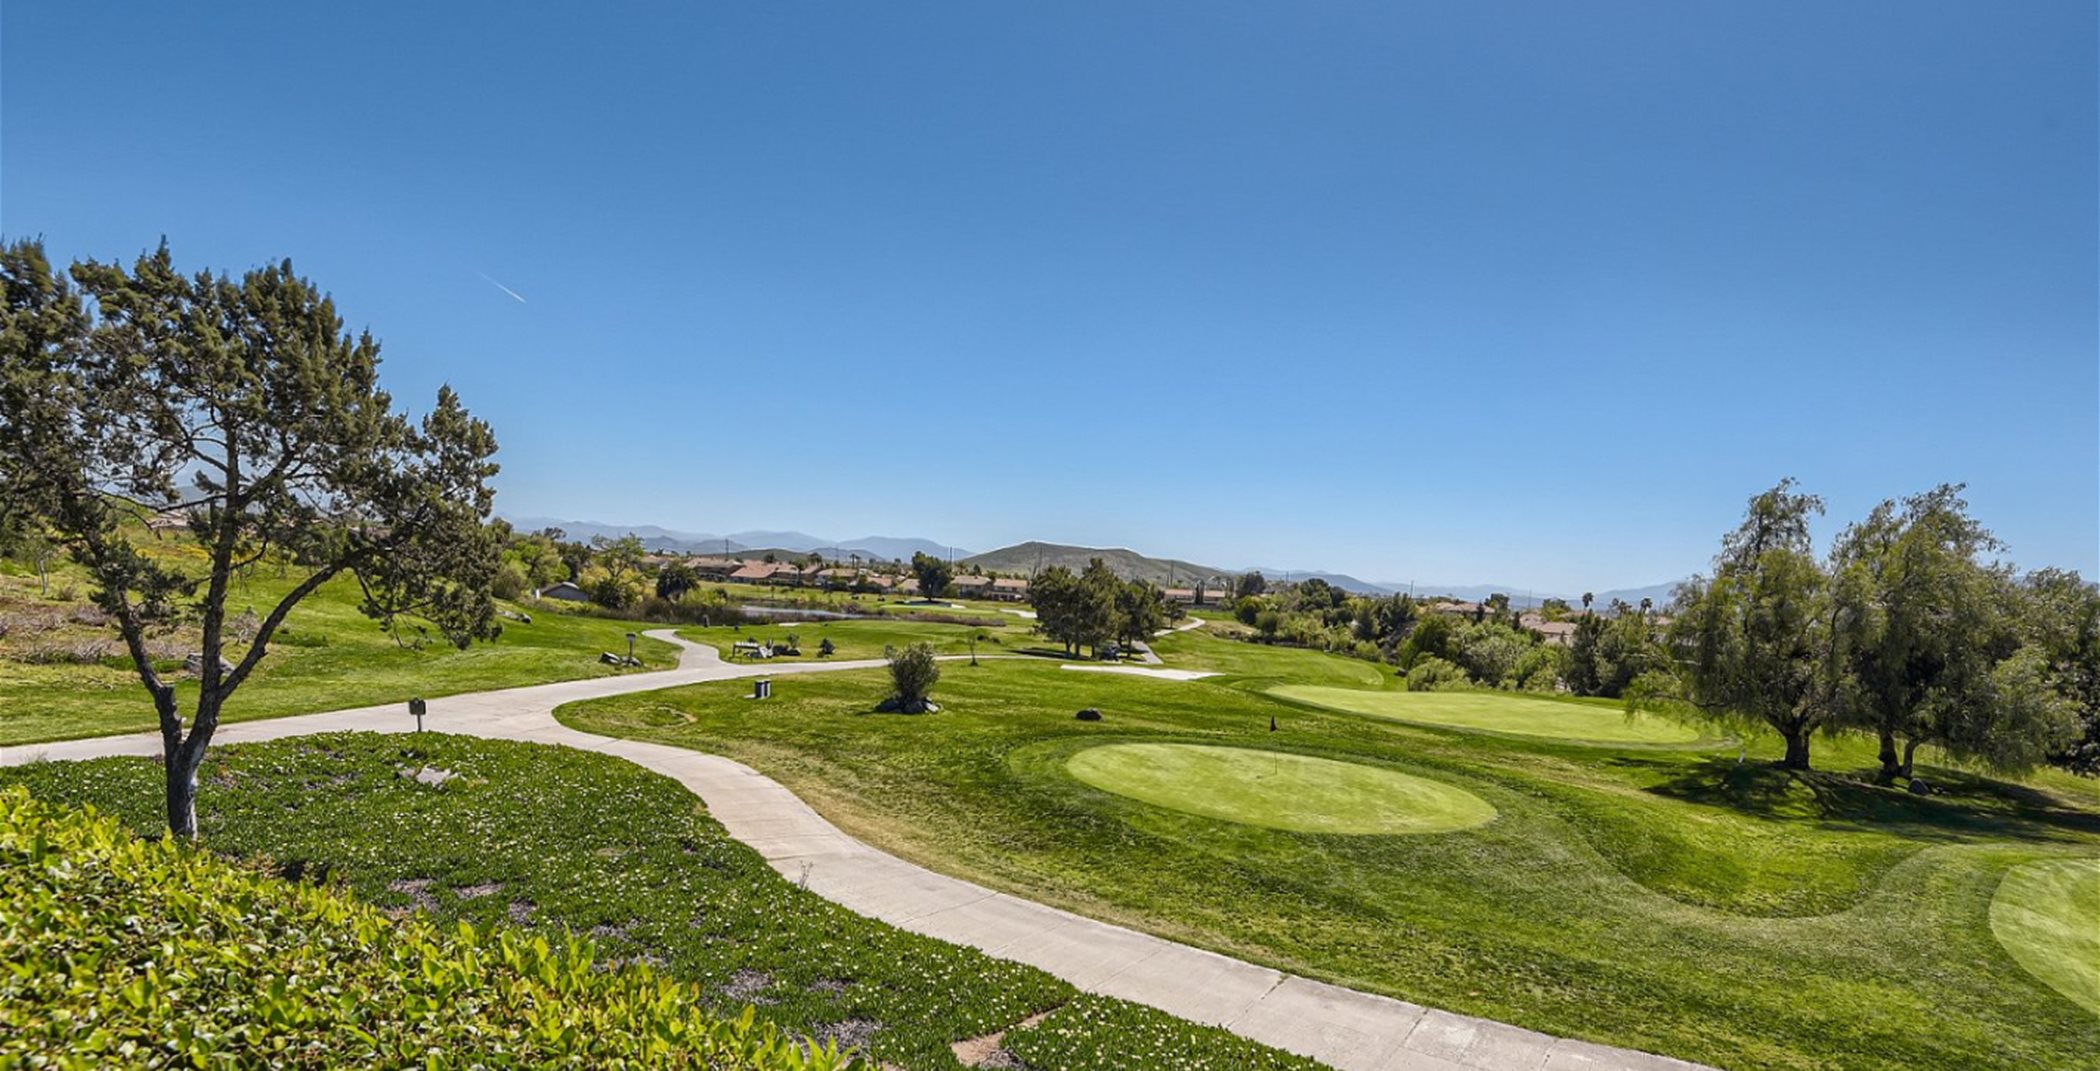 Rancho California Golf club